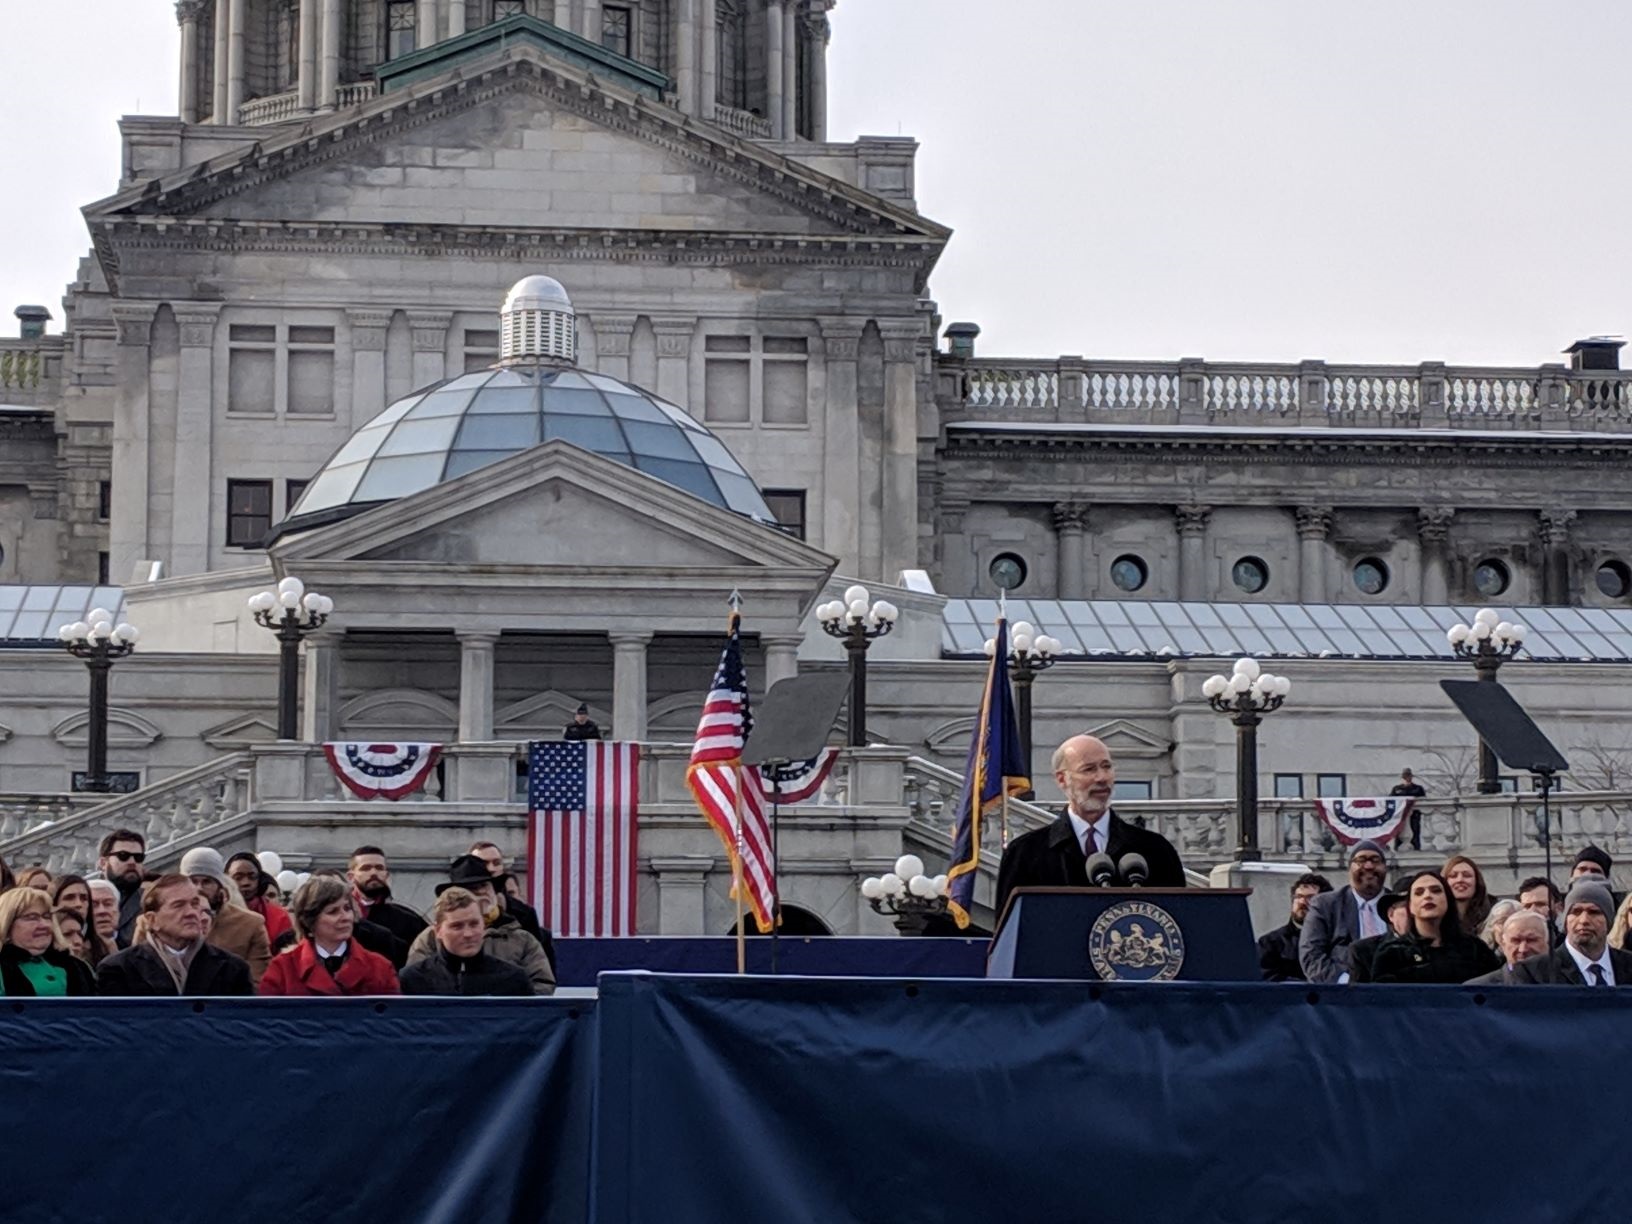 Governor Tom Wolf speaks at inauguration on Tuesday. Photo: David Maas/AL DIA News.